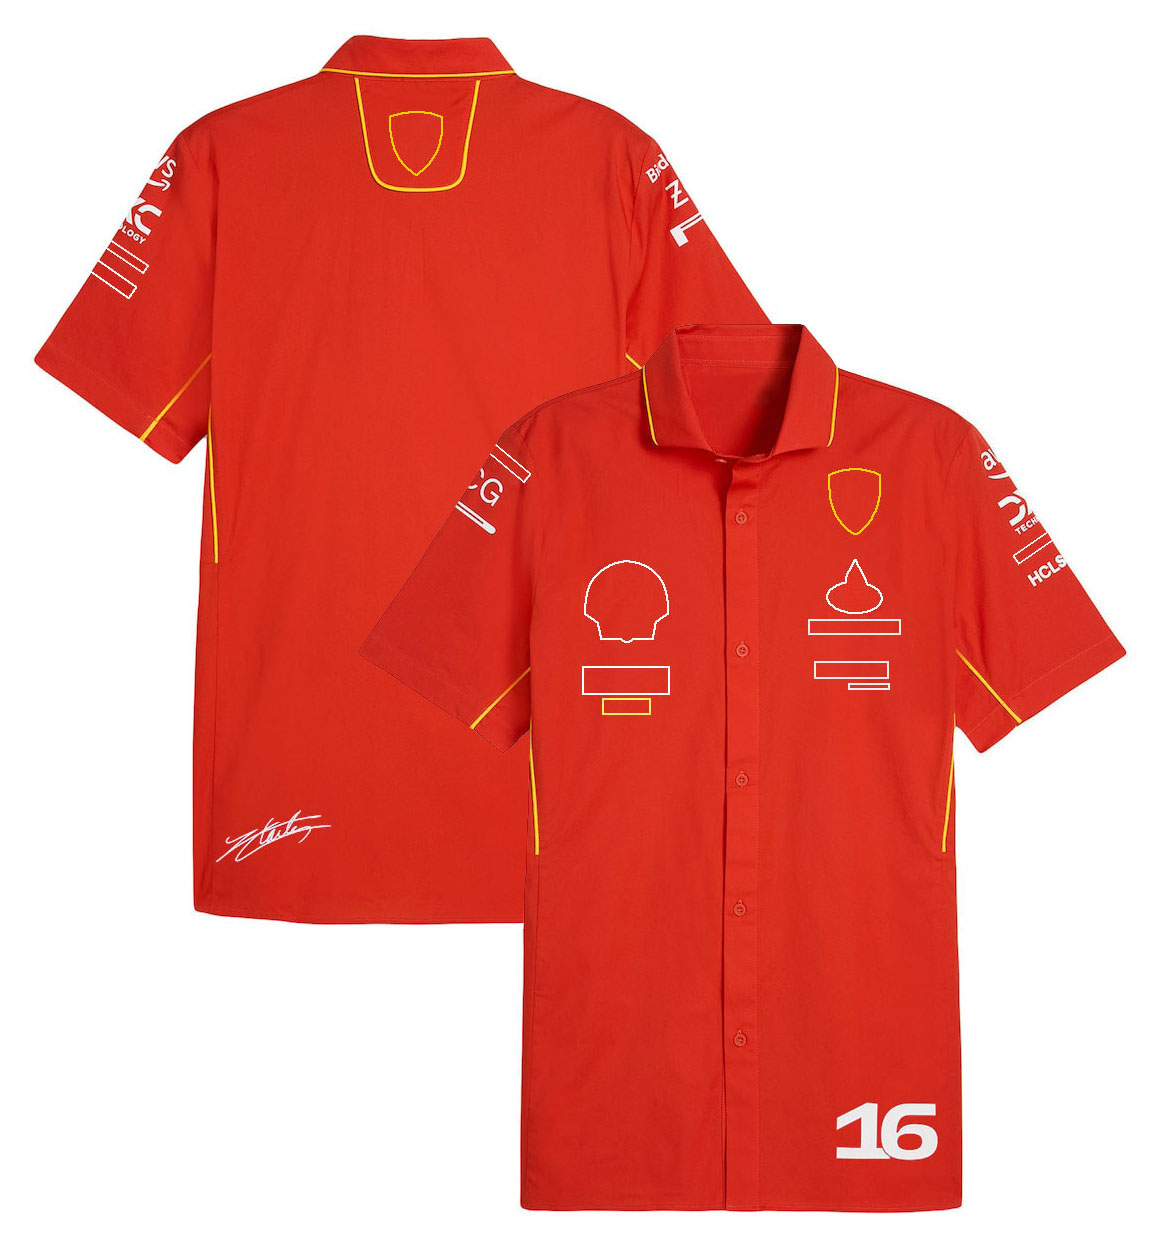 2023 2024 قميص F1 للرجال فورمولا 1 بولو القمصان تي شيرت تي شيرت سائق سباق موسم جديد غير رسمية قميص أحمر قميص زائد زائد